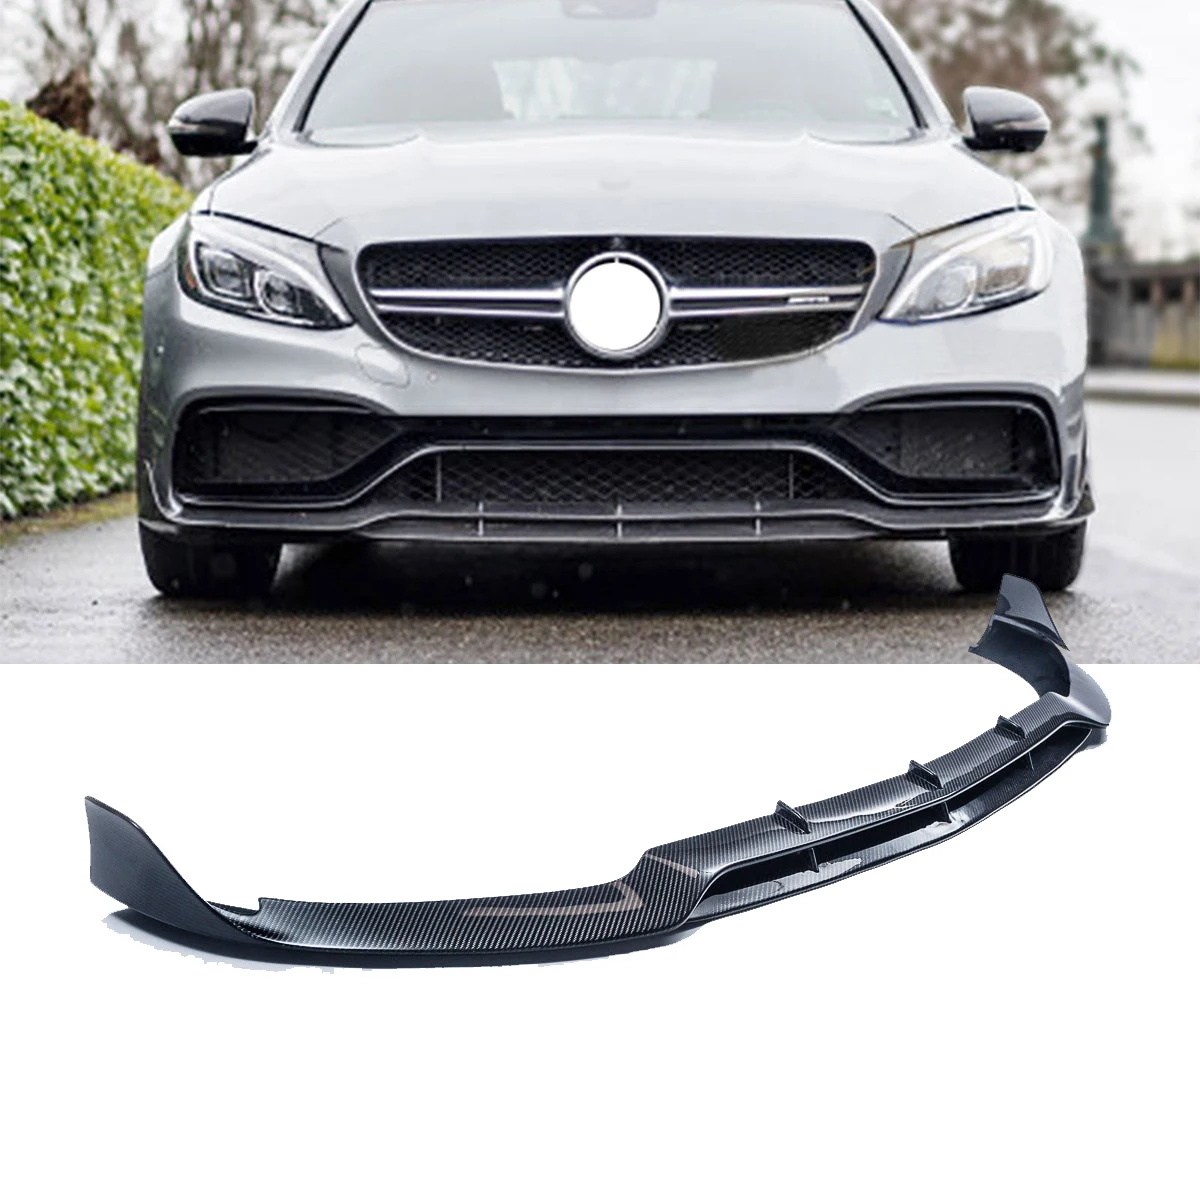 OEM Style Car Parts Carbon Fiber Front Lip Fits For Mercedes Benz W204 W205 Amg C63 C43